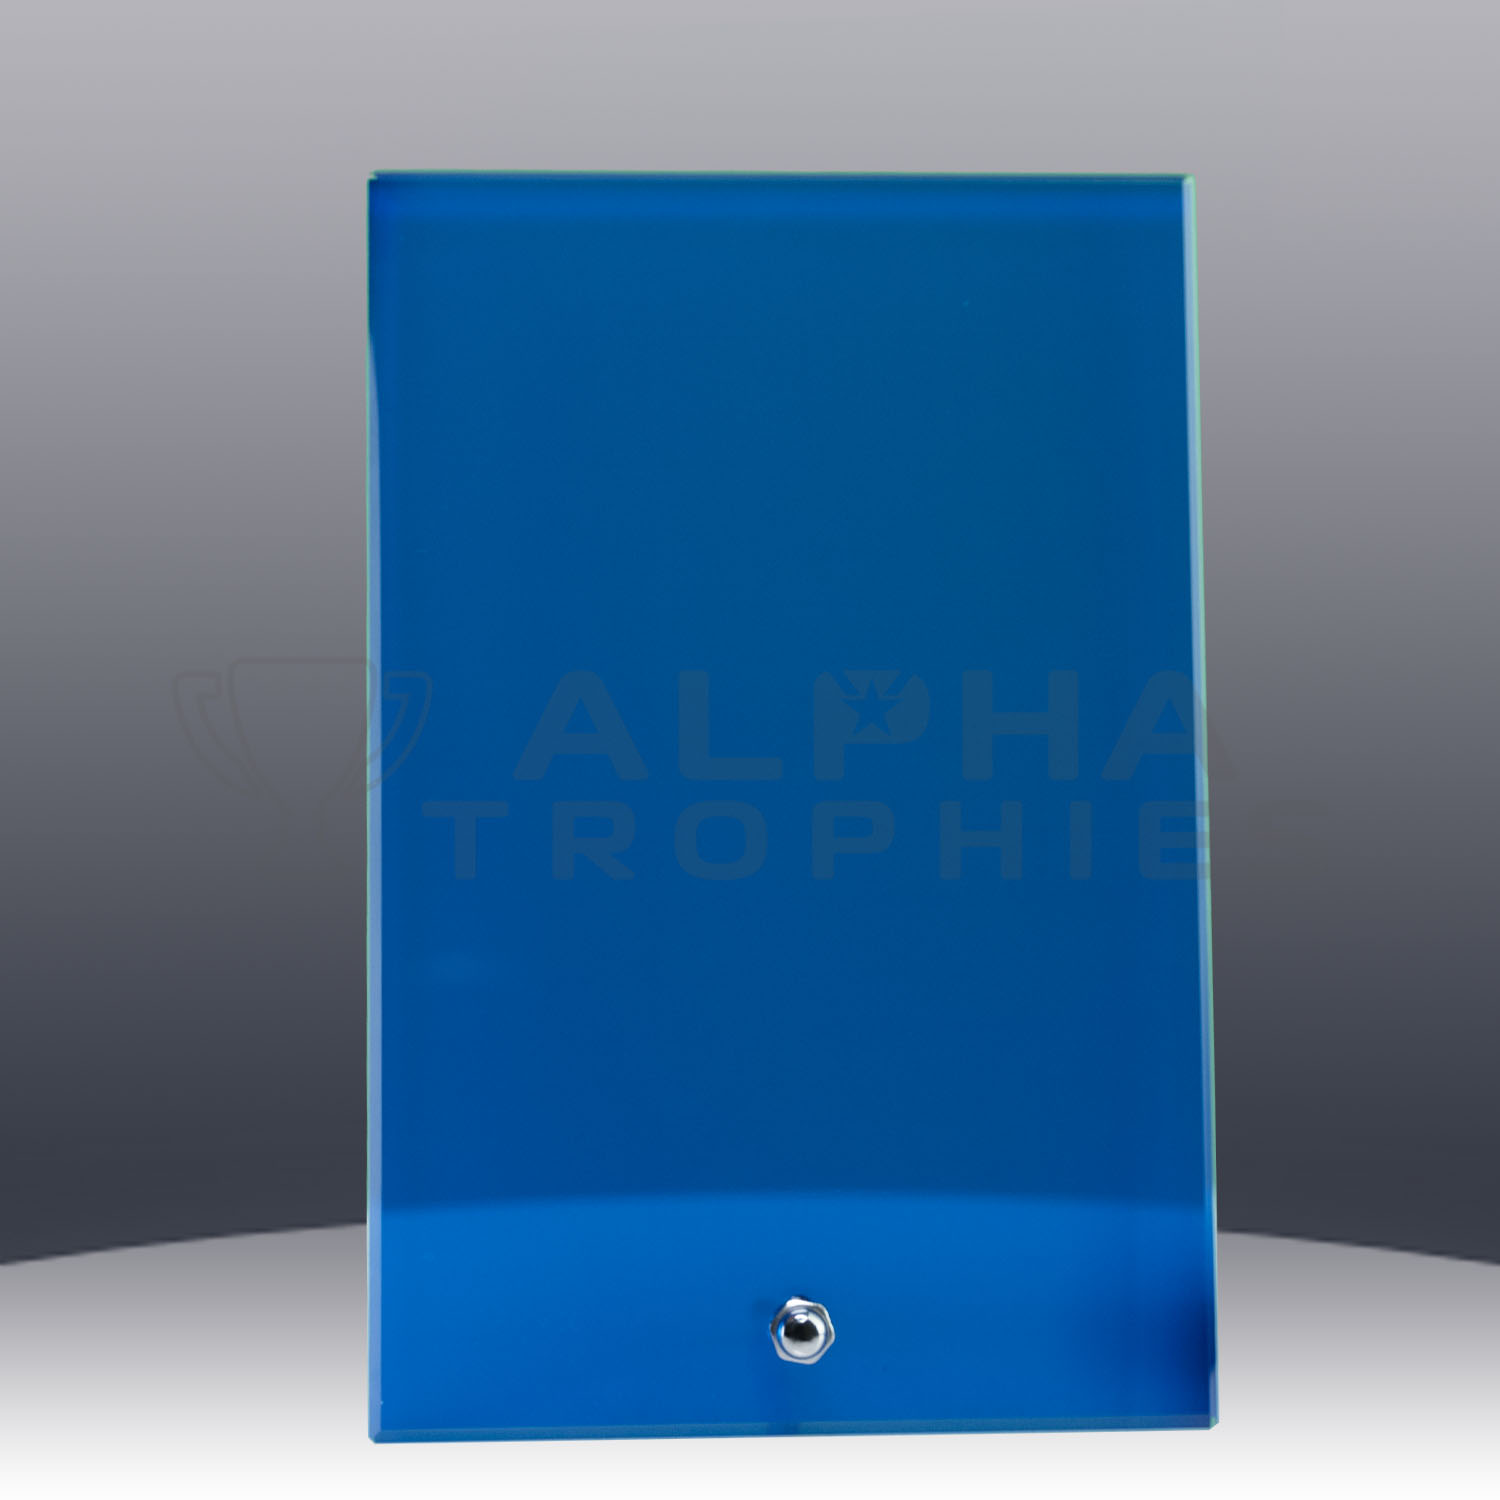 laser-glass-rectangle-blue-1268-1bu-front